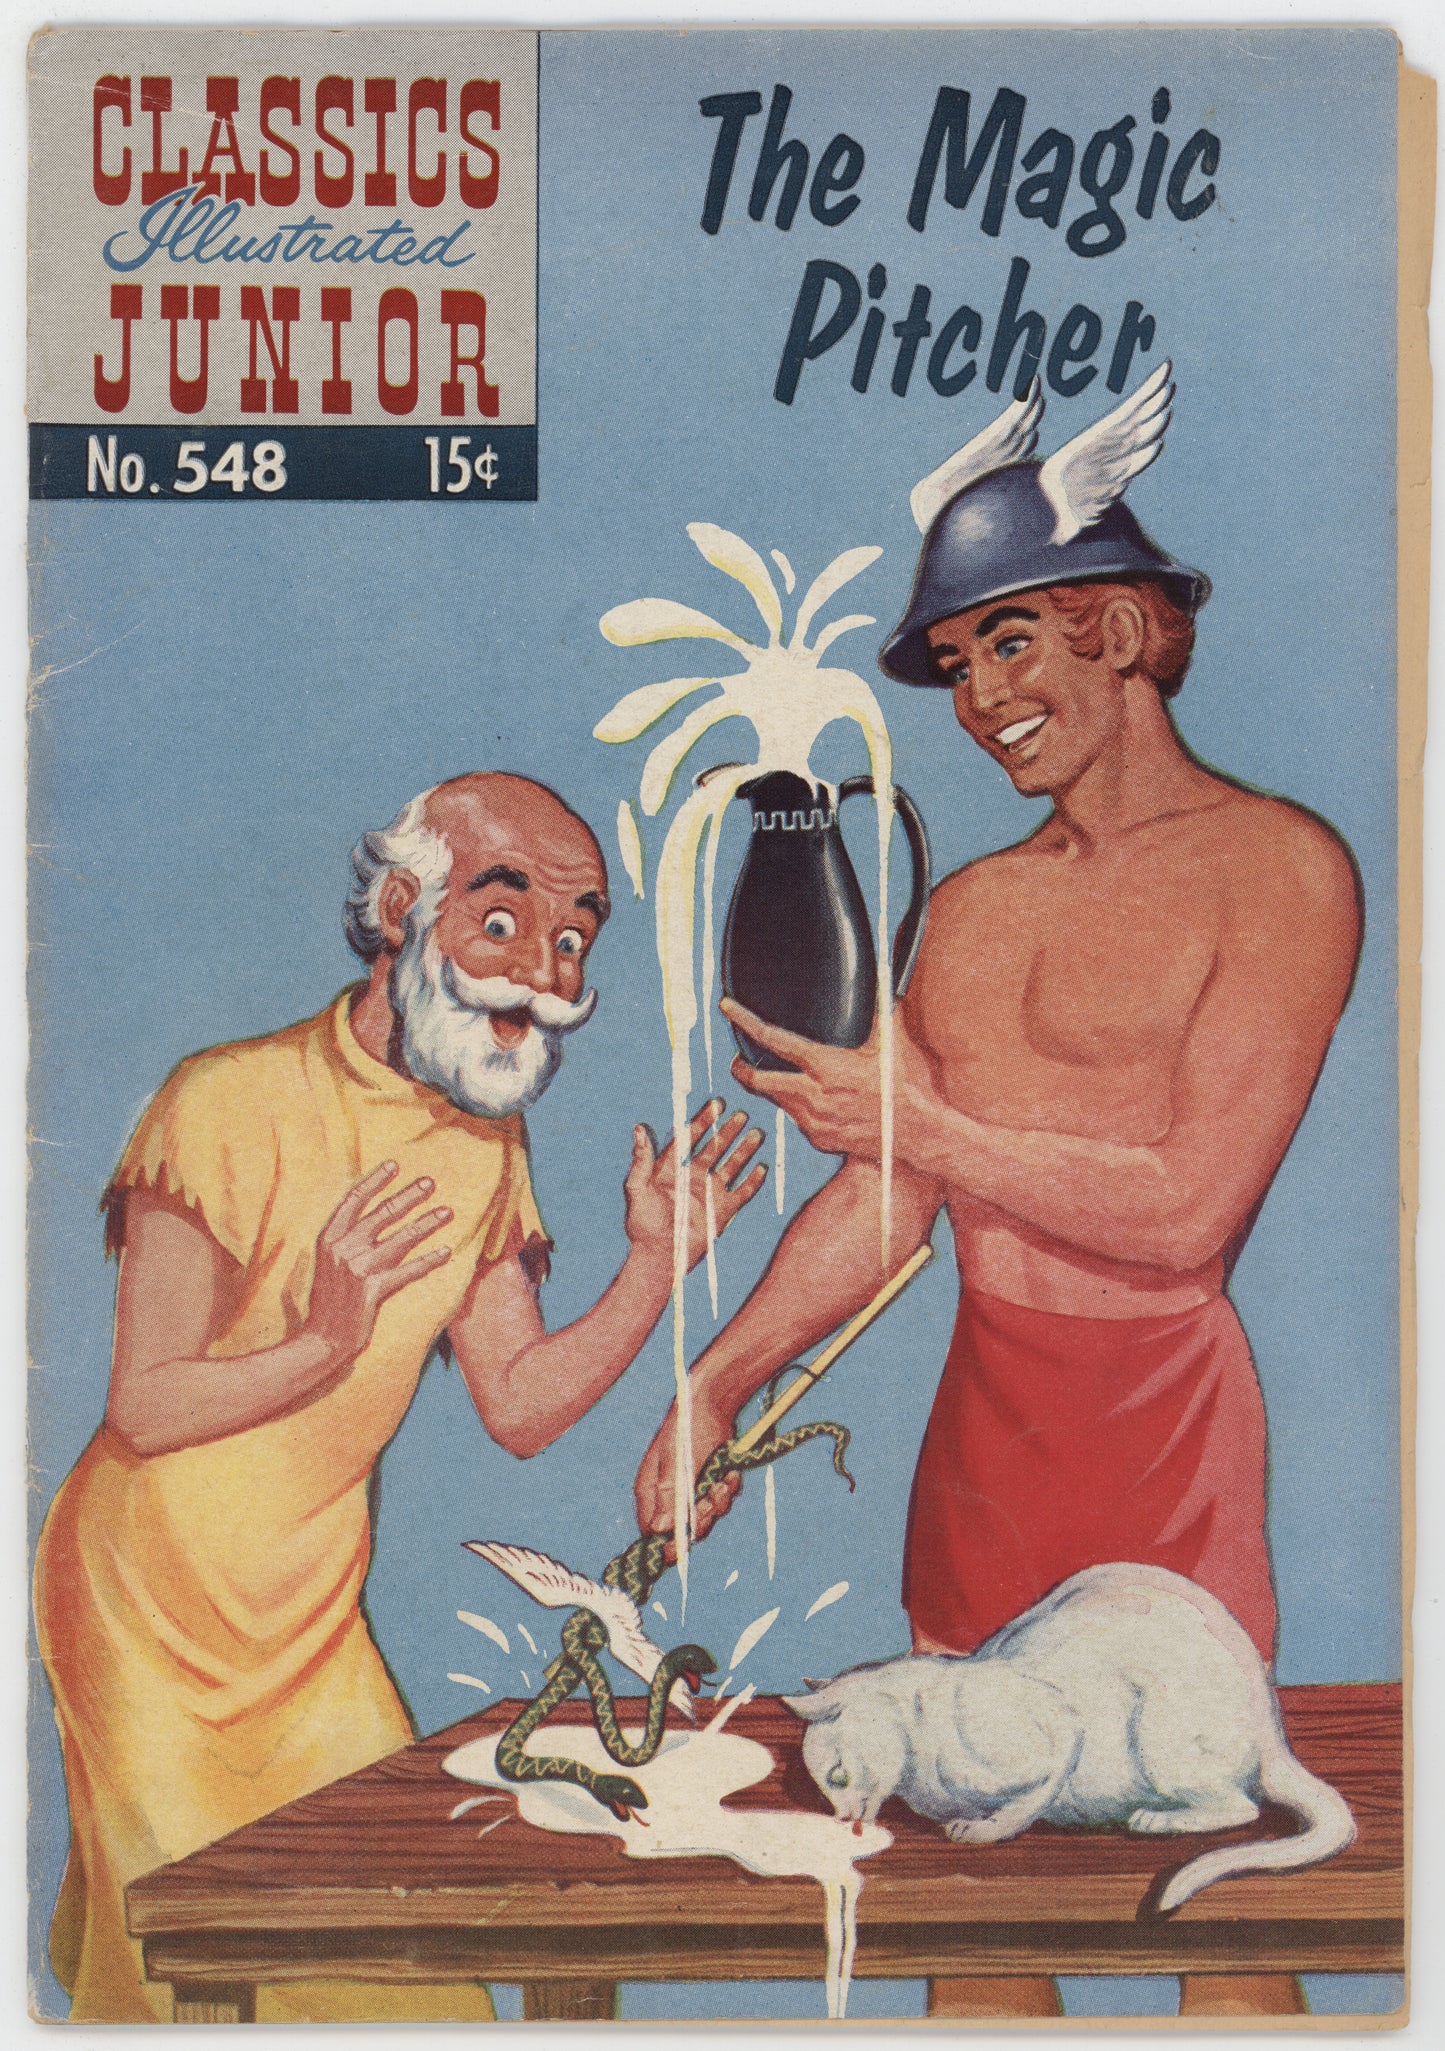 Classics Illustrated Junior 548 Gilberton 1958 FR Magic Pitcher HRN 545